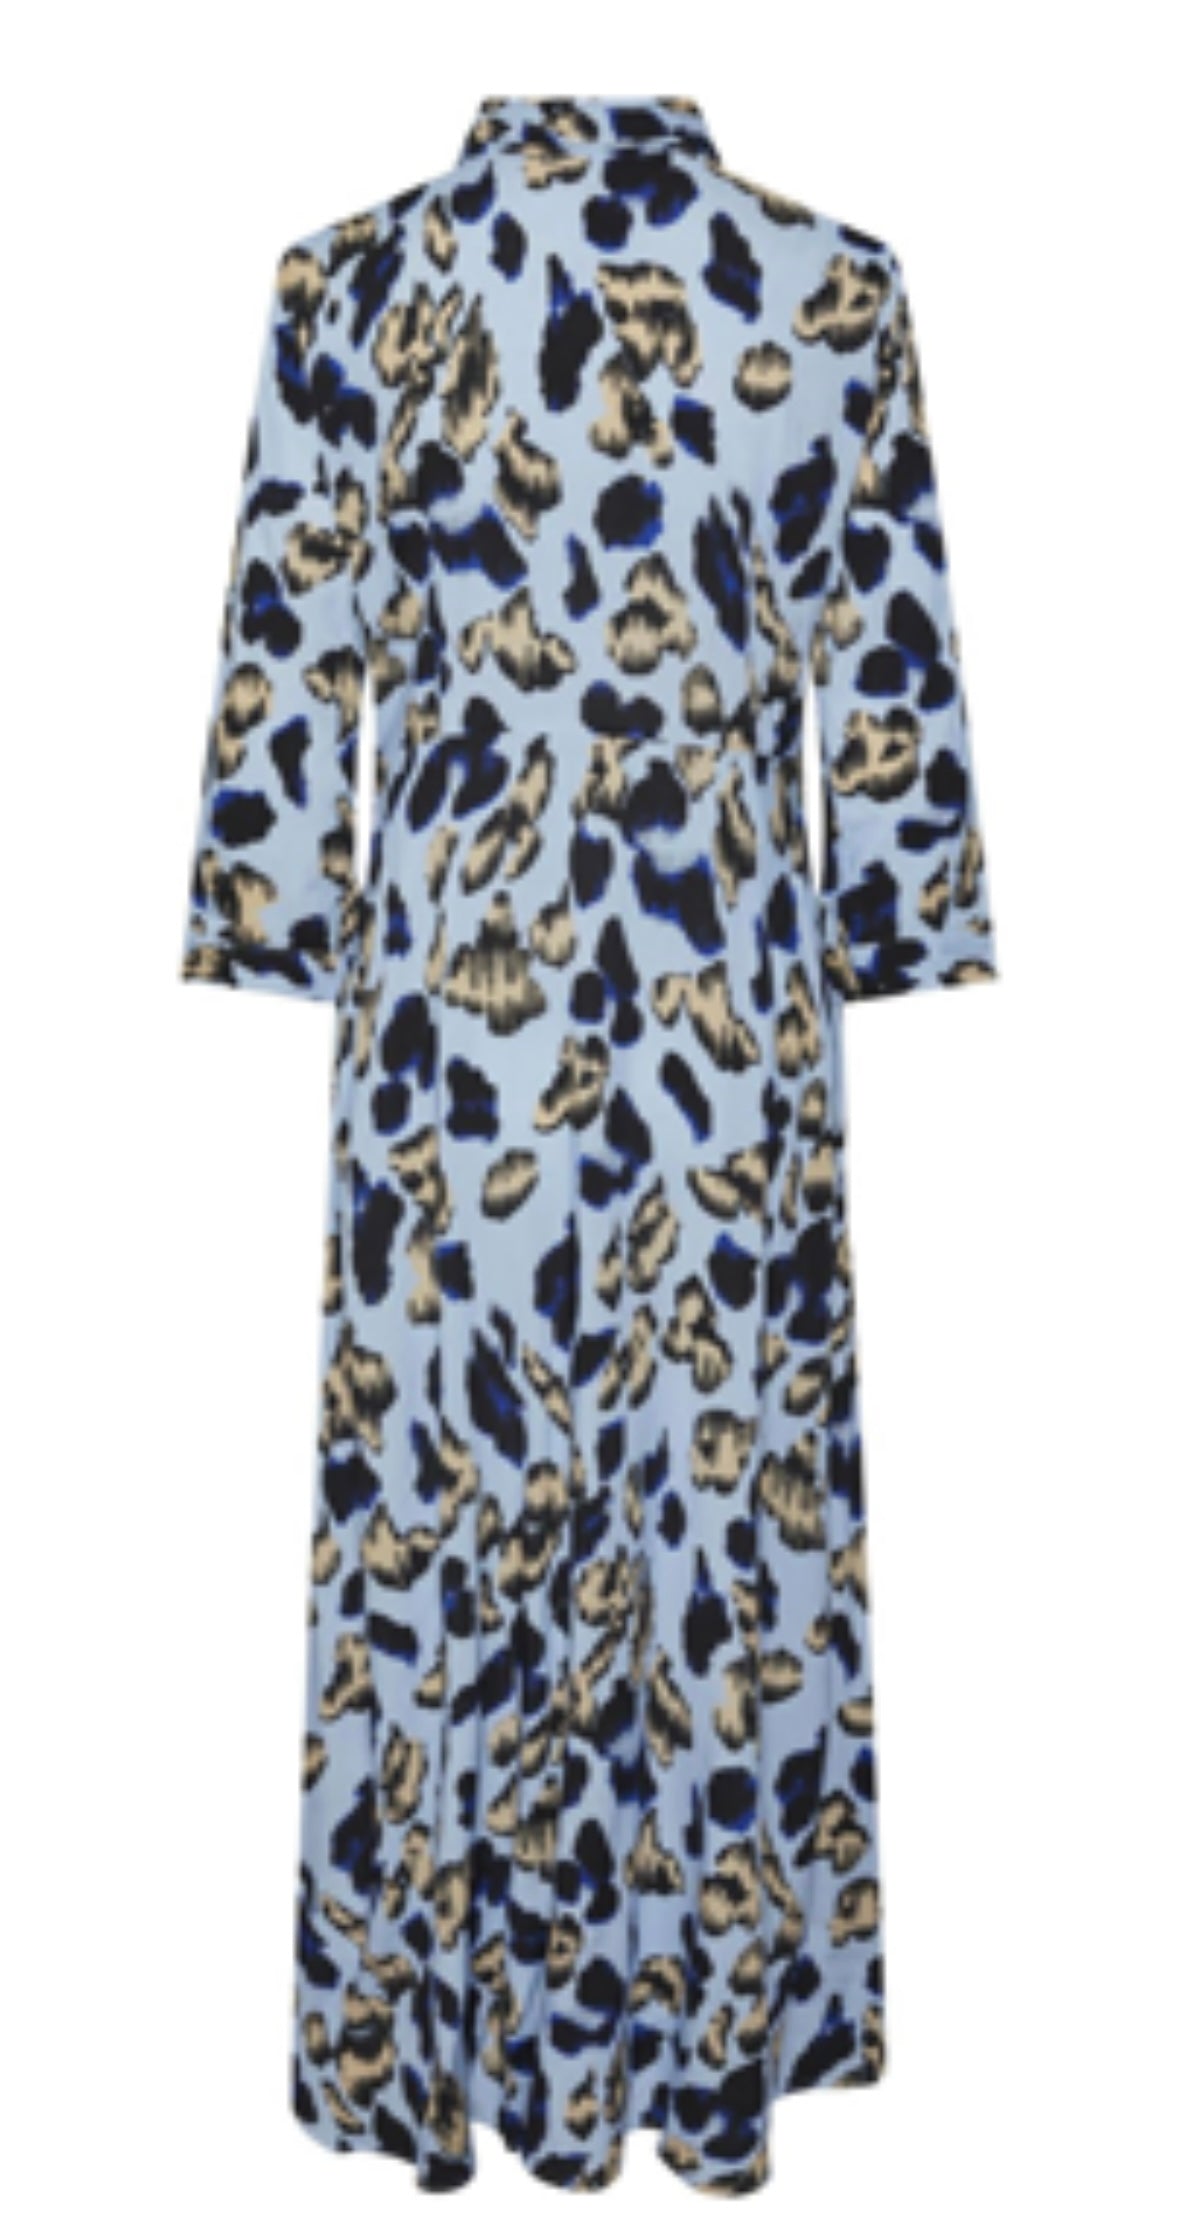 Y.A.S Savannah Blue Leopard Dress